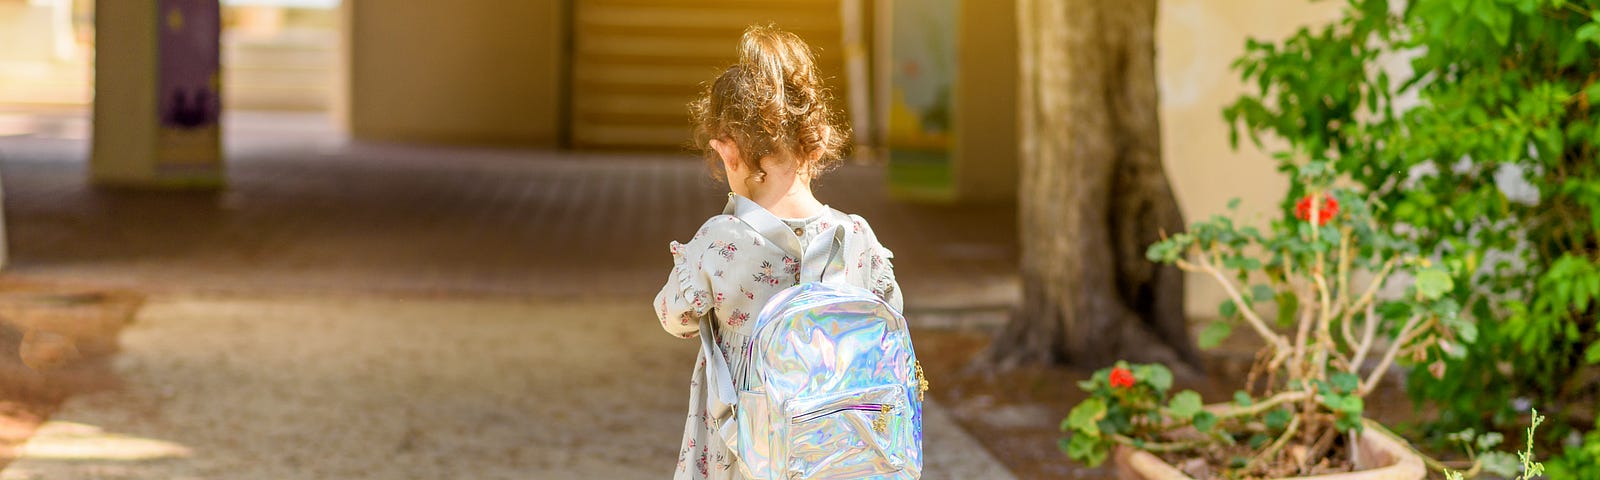 little girl walking into first day of kindergarten